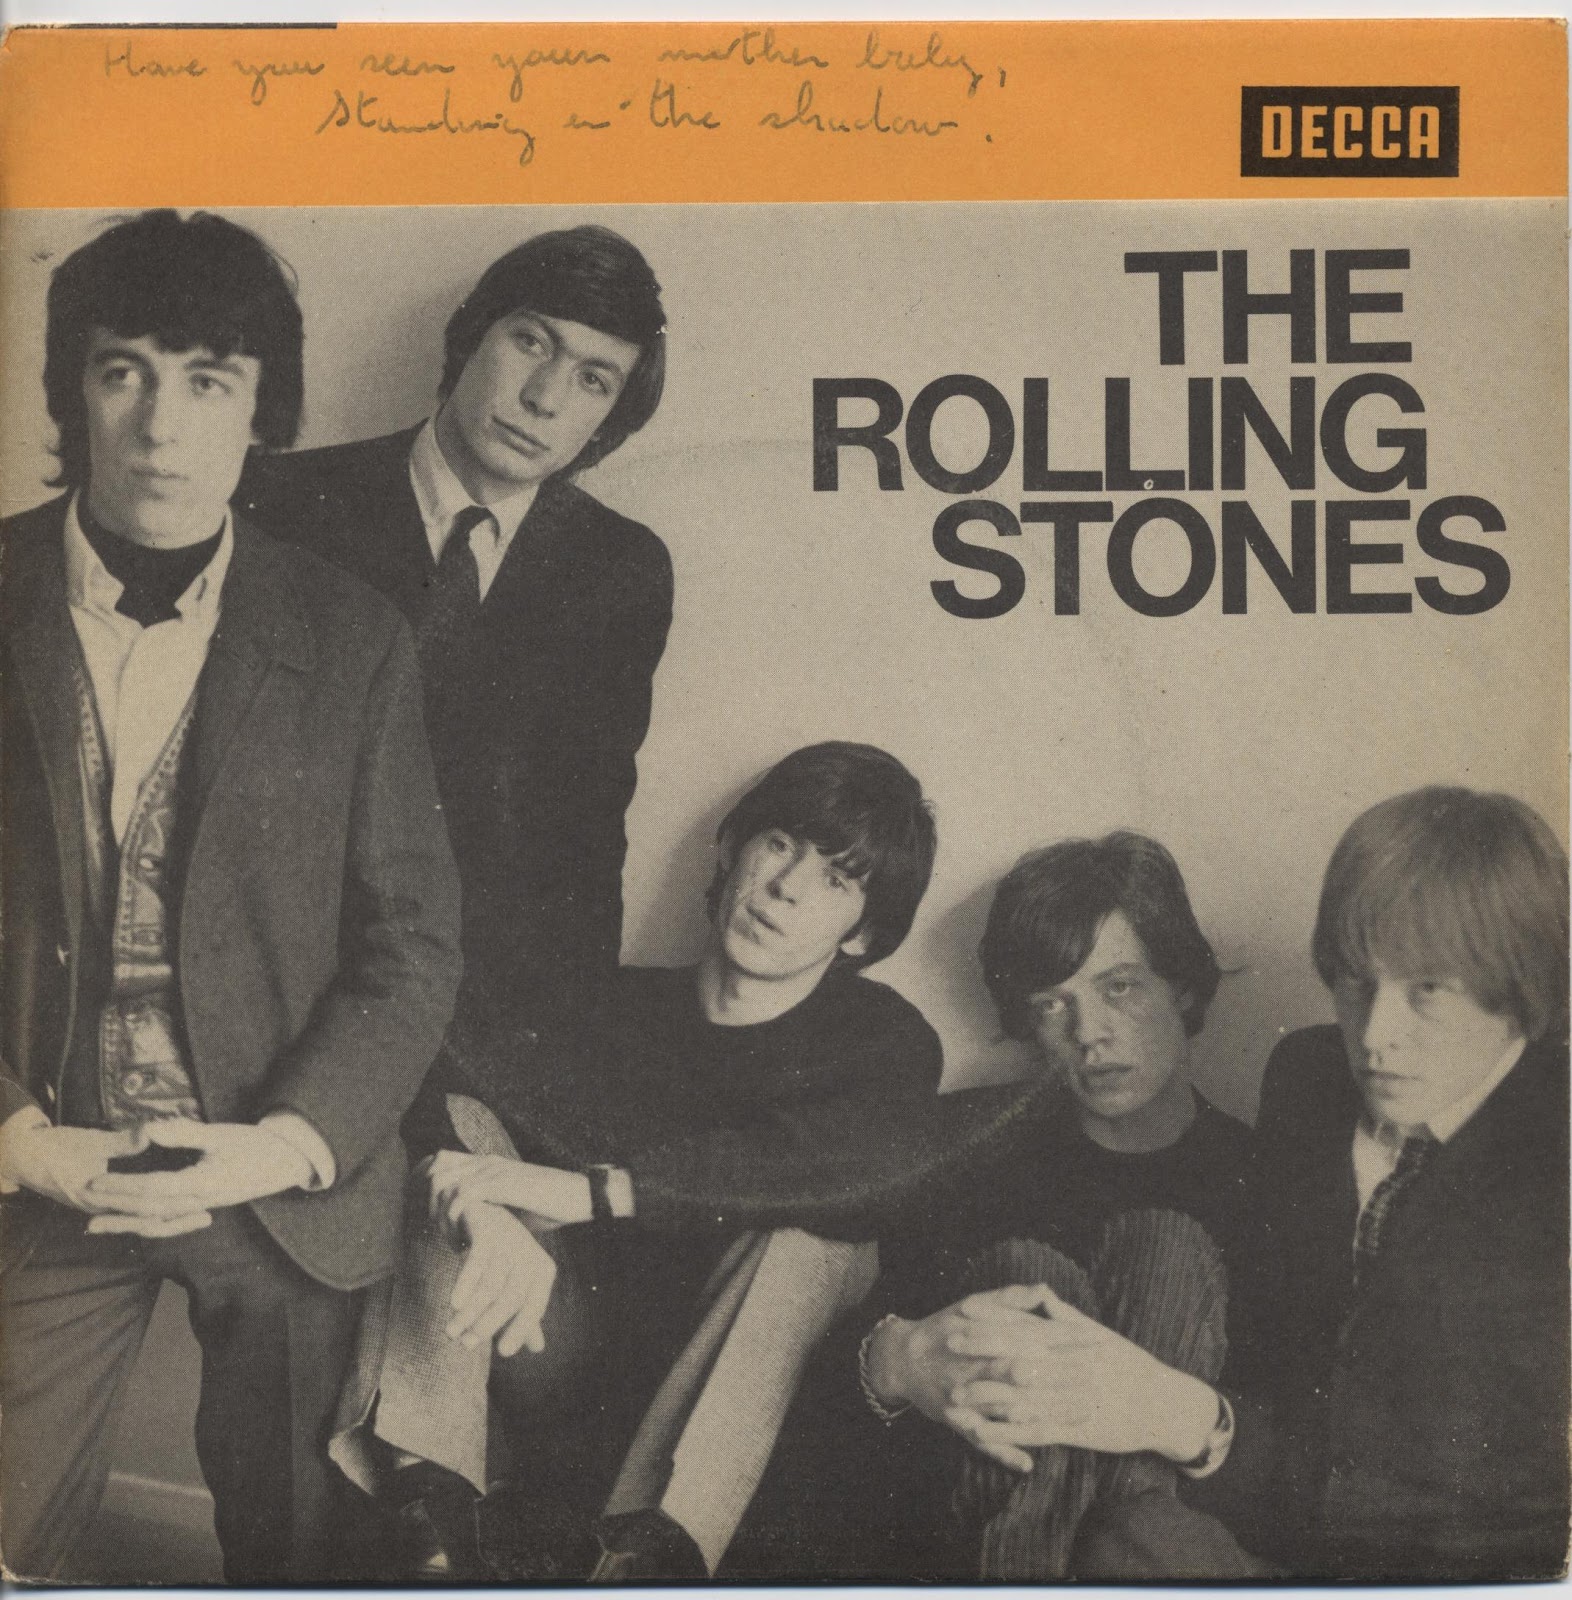 Rolling stones get. Роллинг стоунз 1965. Группа the Rolling Stones альбомы. The Rolling Stones - "the Rolling Stones, Now!" (1965). Роллинг стоунз альбом 1995.